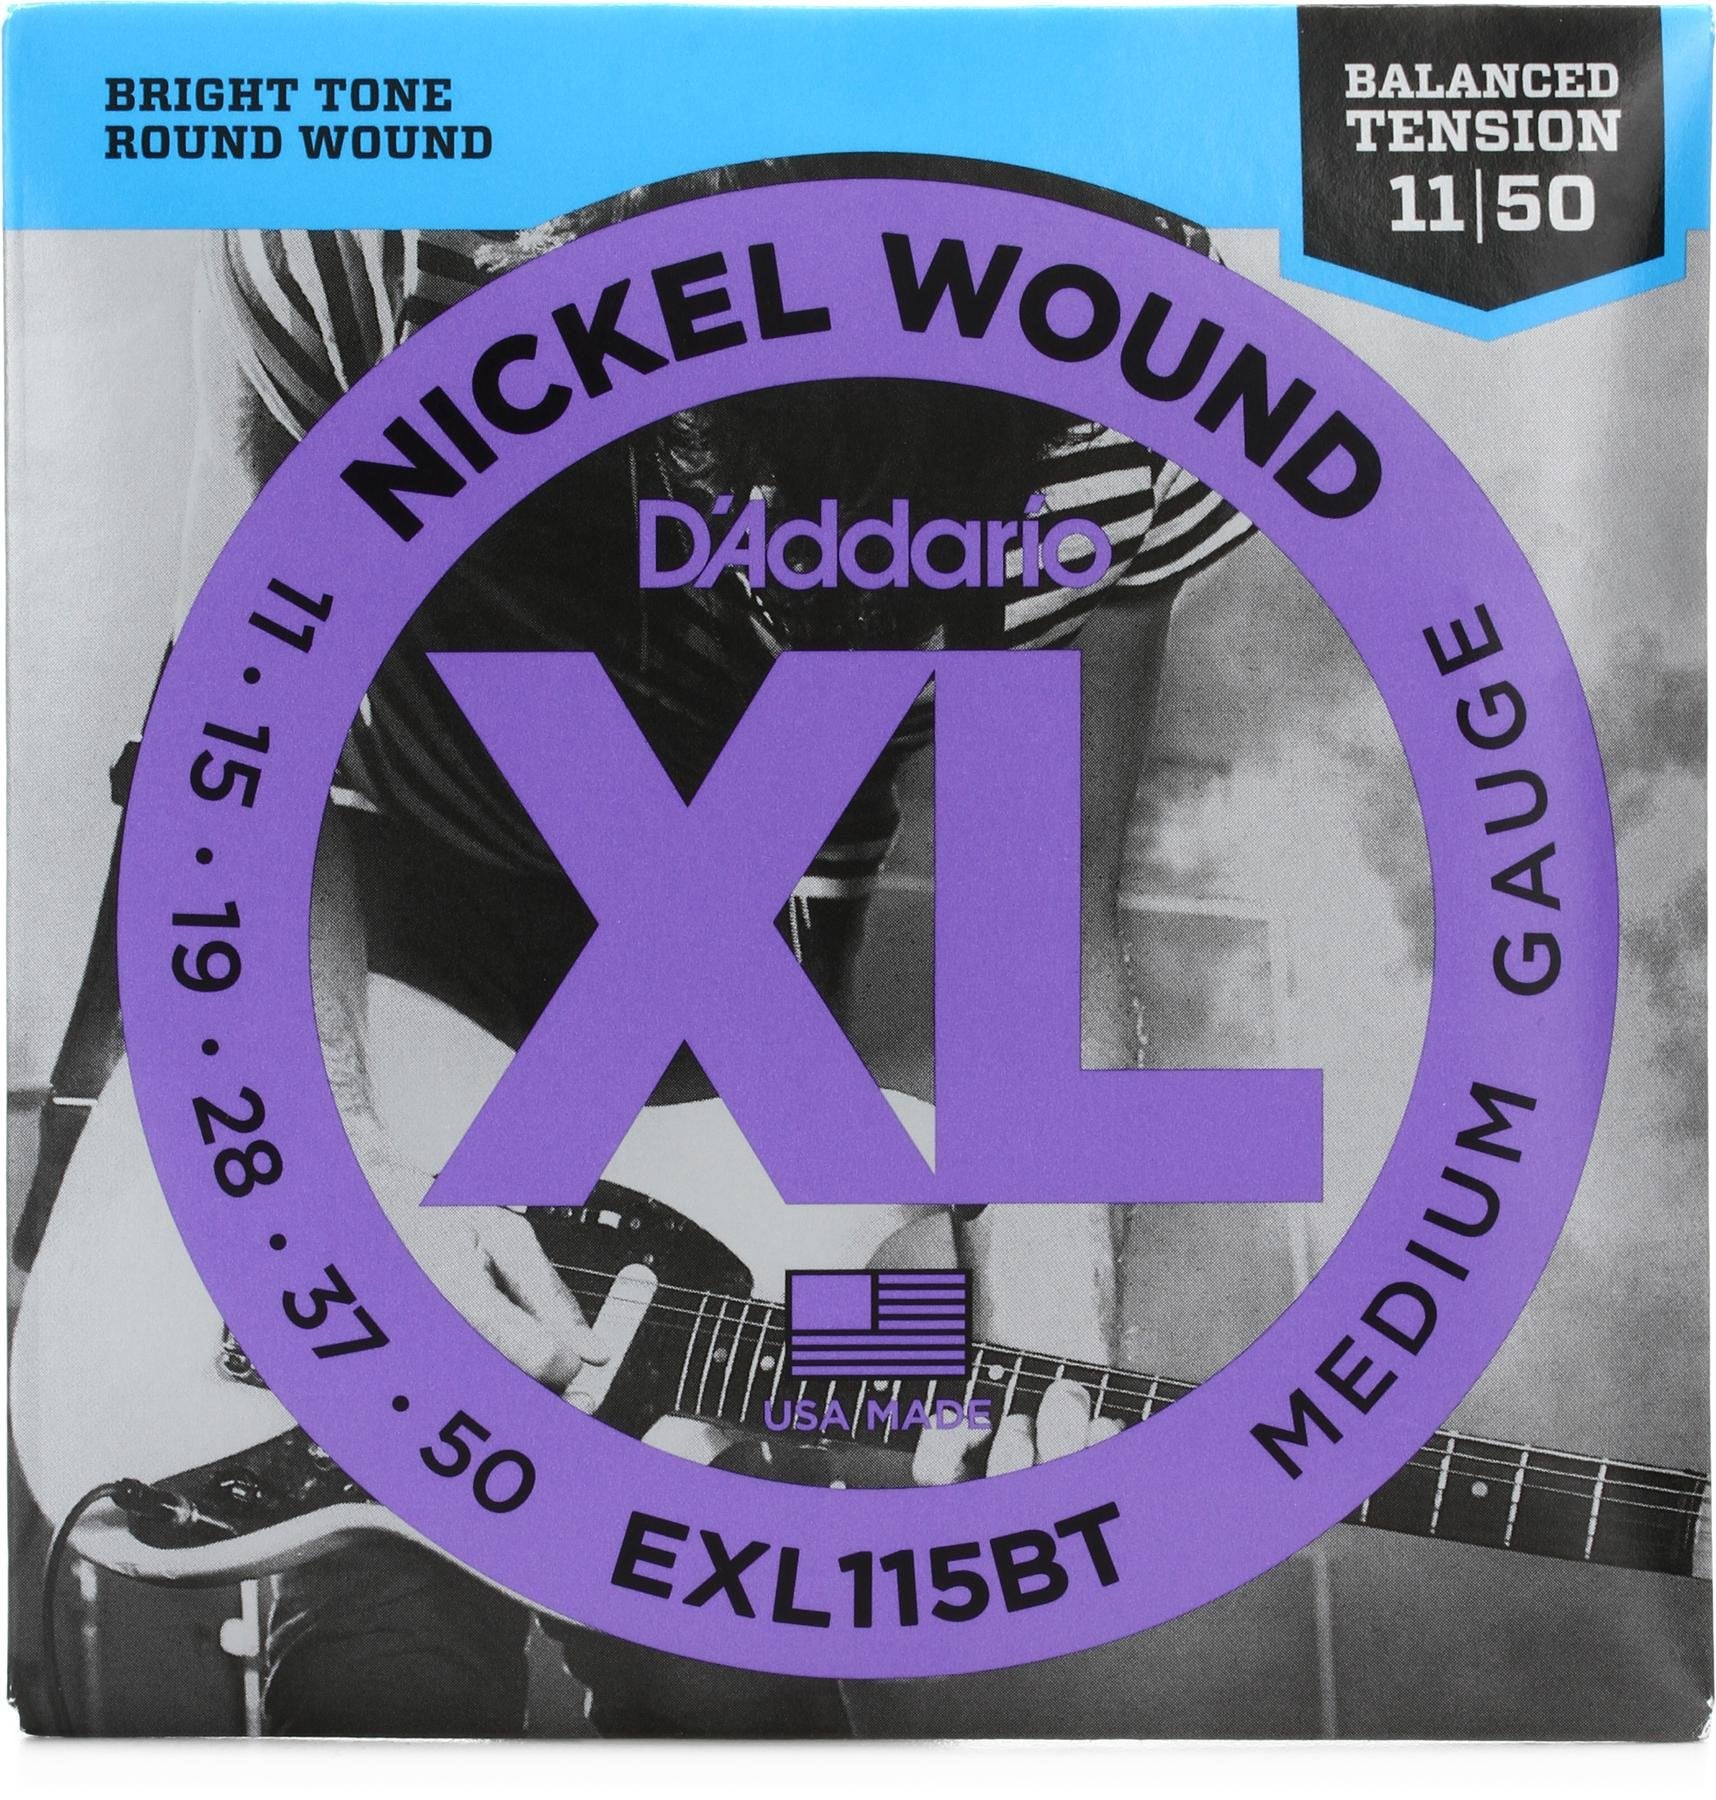 D'Addario EXL115BT Nickel Wound Medium Electric Strings - .011-.050 Balanced Tension Medium